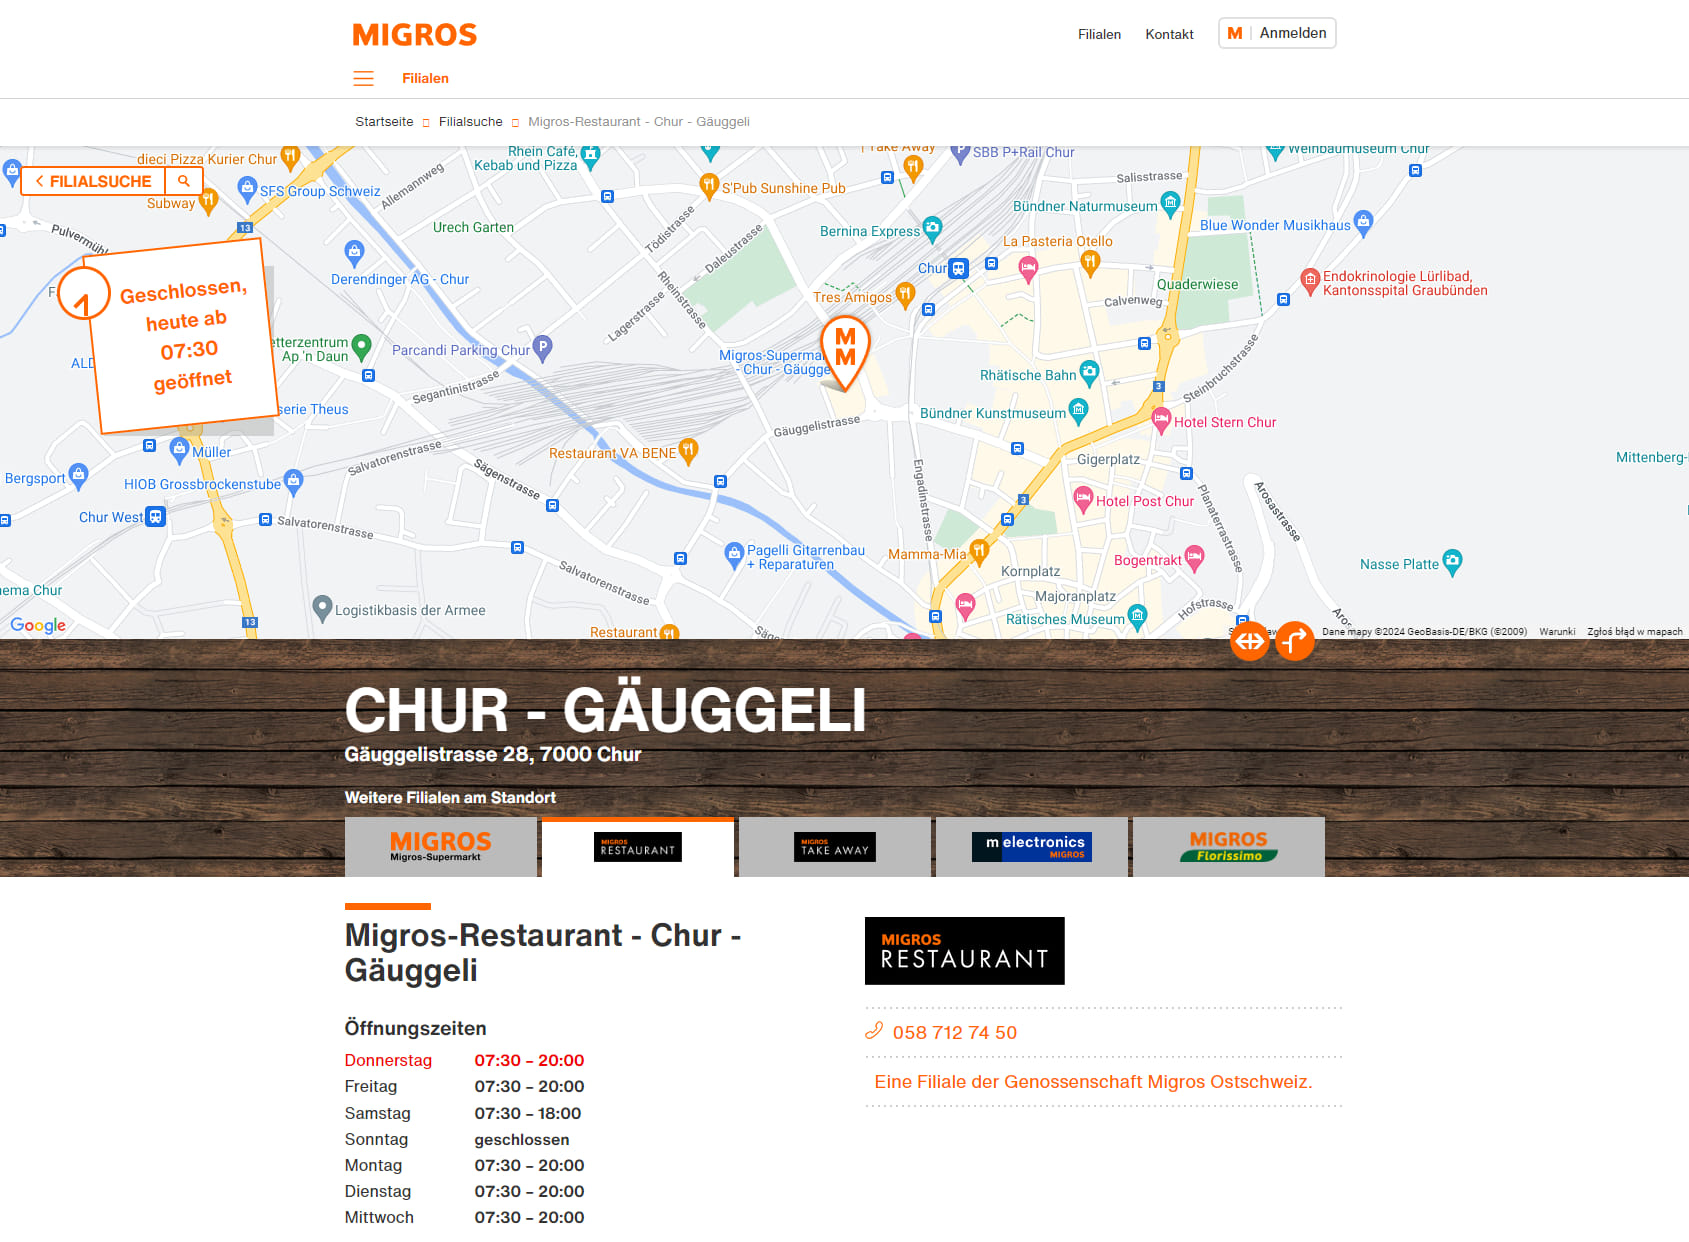 Migros-Restaurant - Chur - Gäuggeli